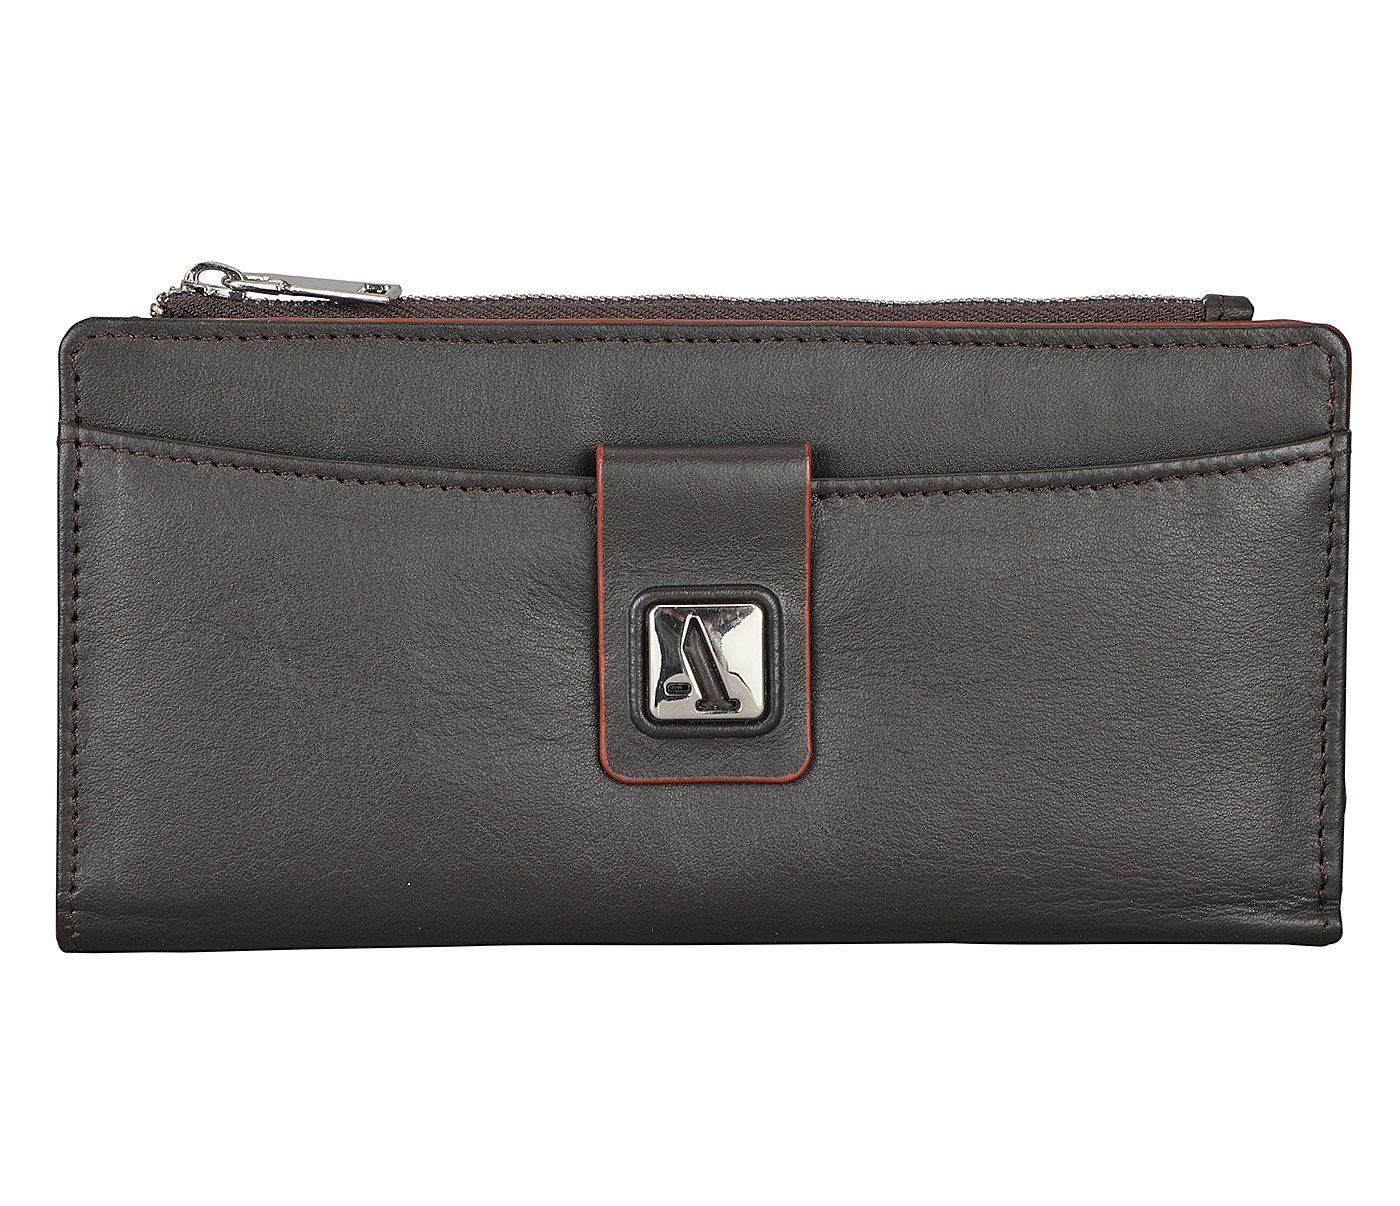 W338-Claudita-Women's wallet with loop and zip closing in genuine leather - Brown / Tan